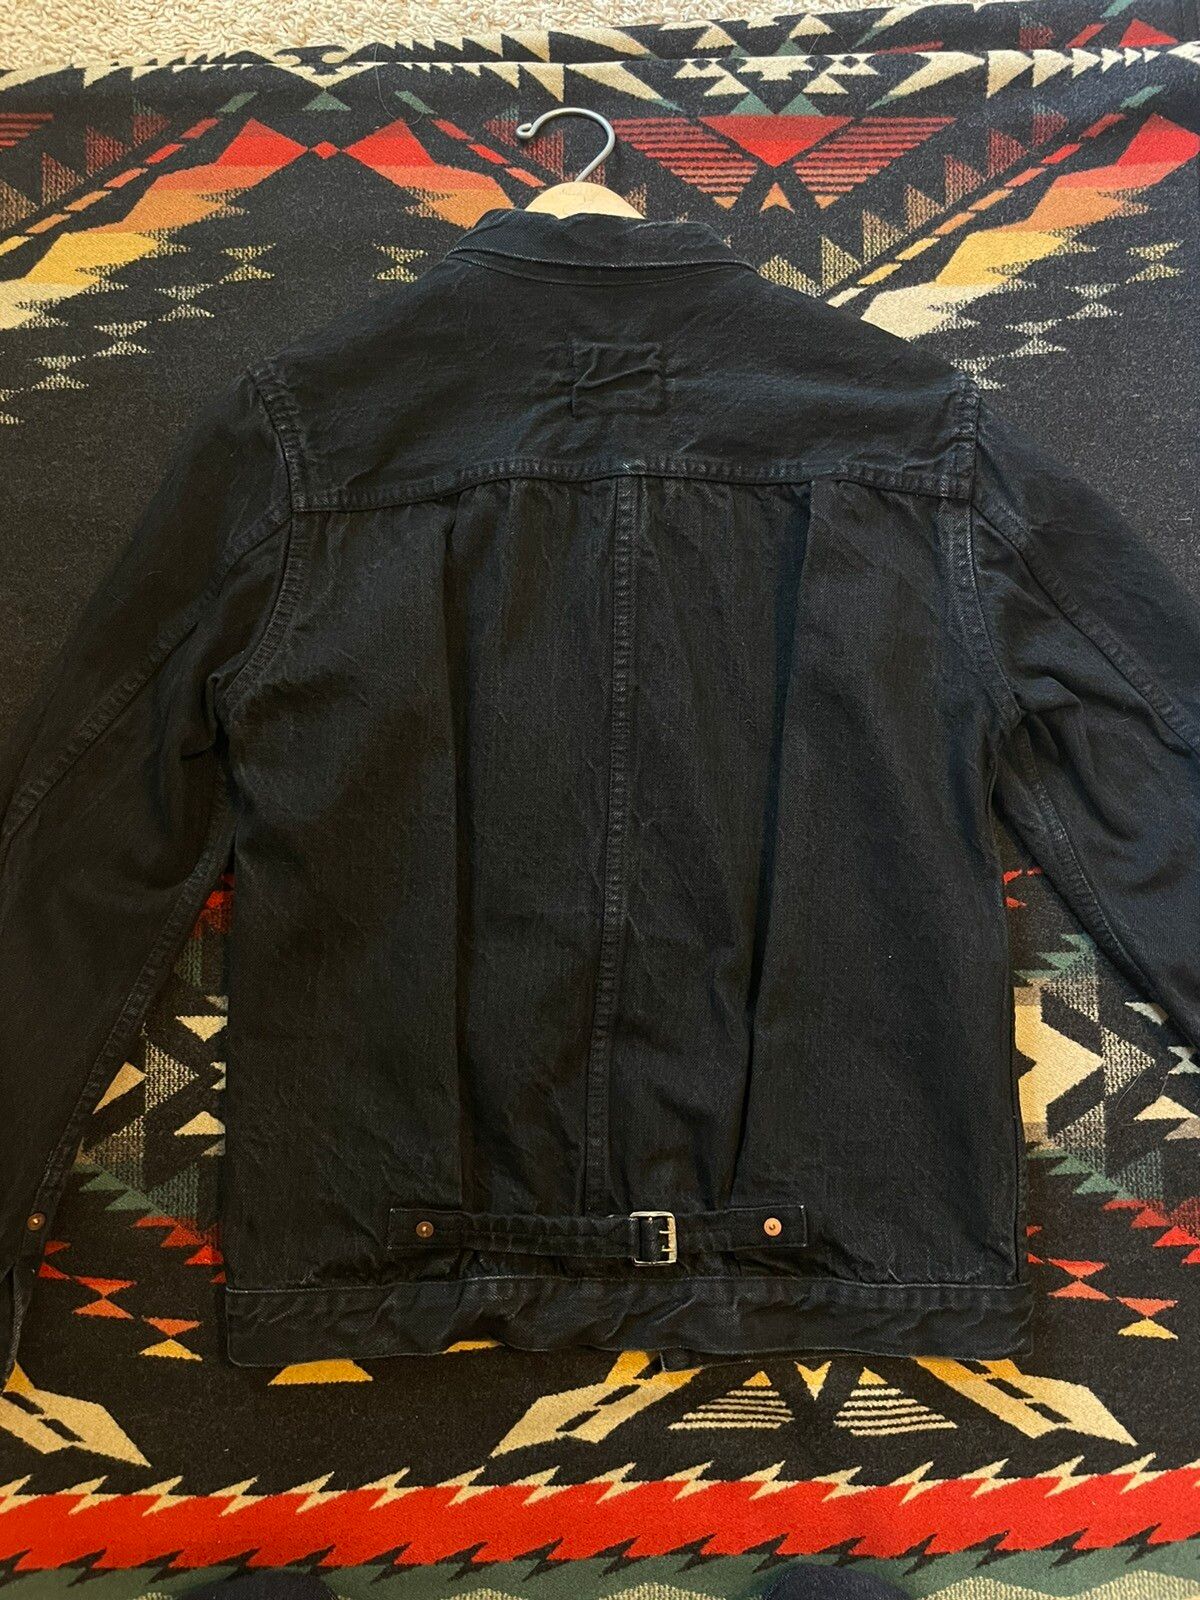 Tcb Jeans TCB jeans s40's jacket black on black denim | Grailed